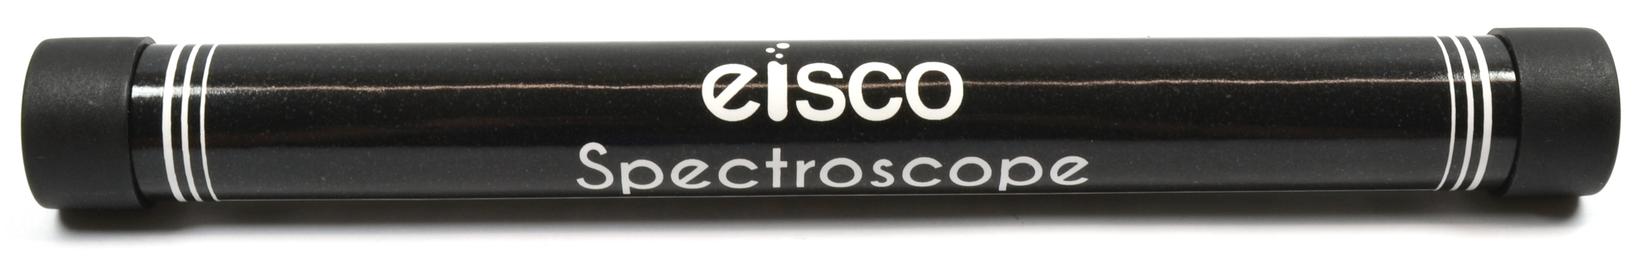 Economy Spectroscope Tube - 500 Lines/mm Grating - Eisco Labs